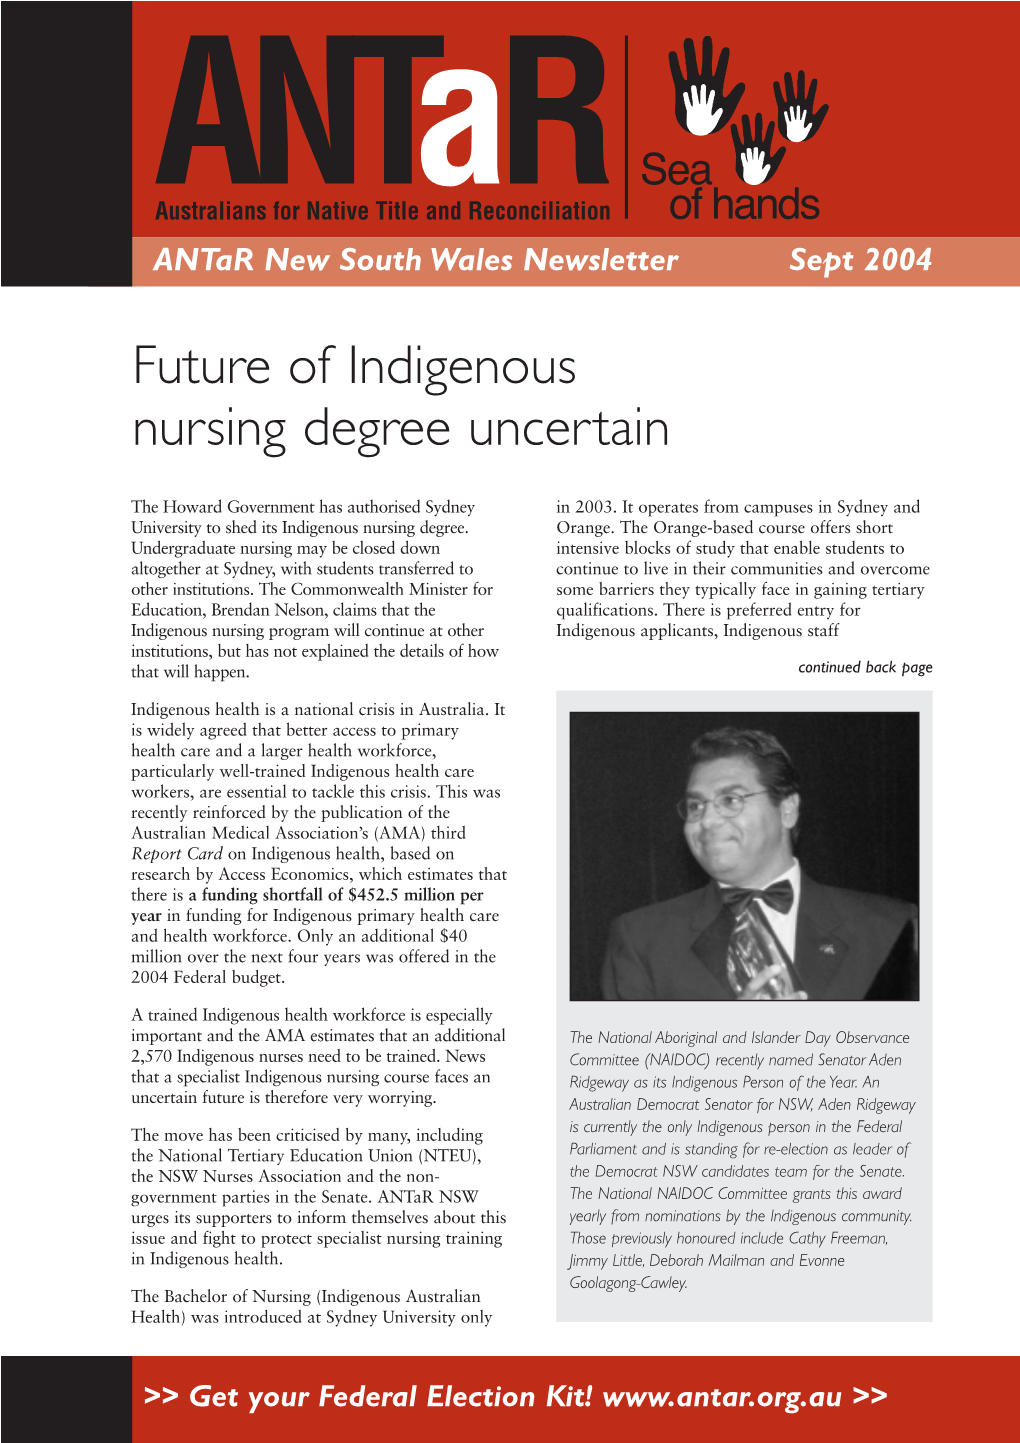 Future of Indigenous Nursing Degree Uncertain